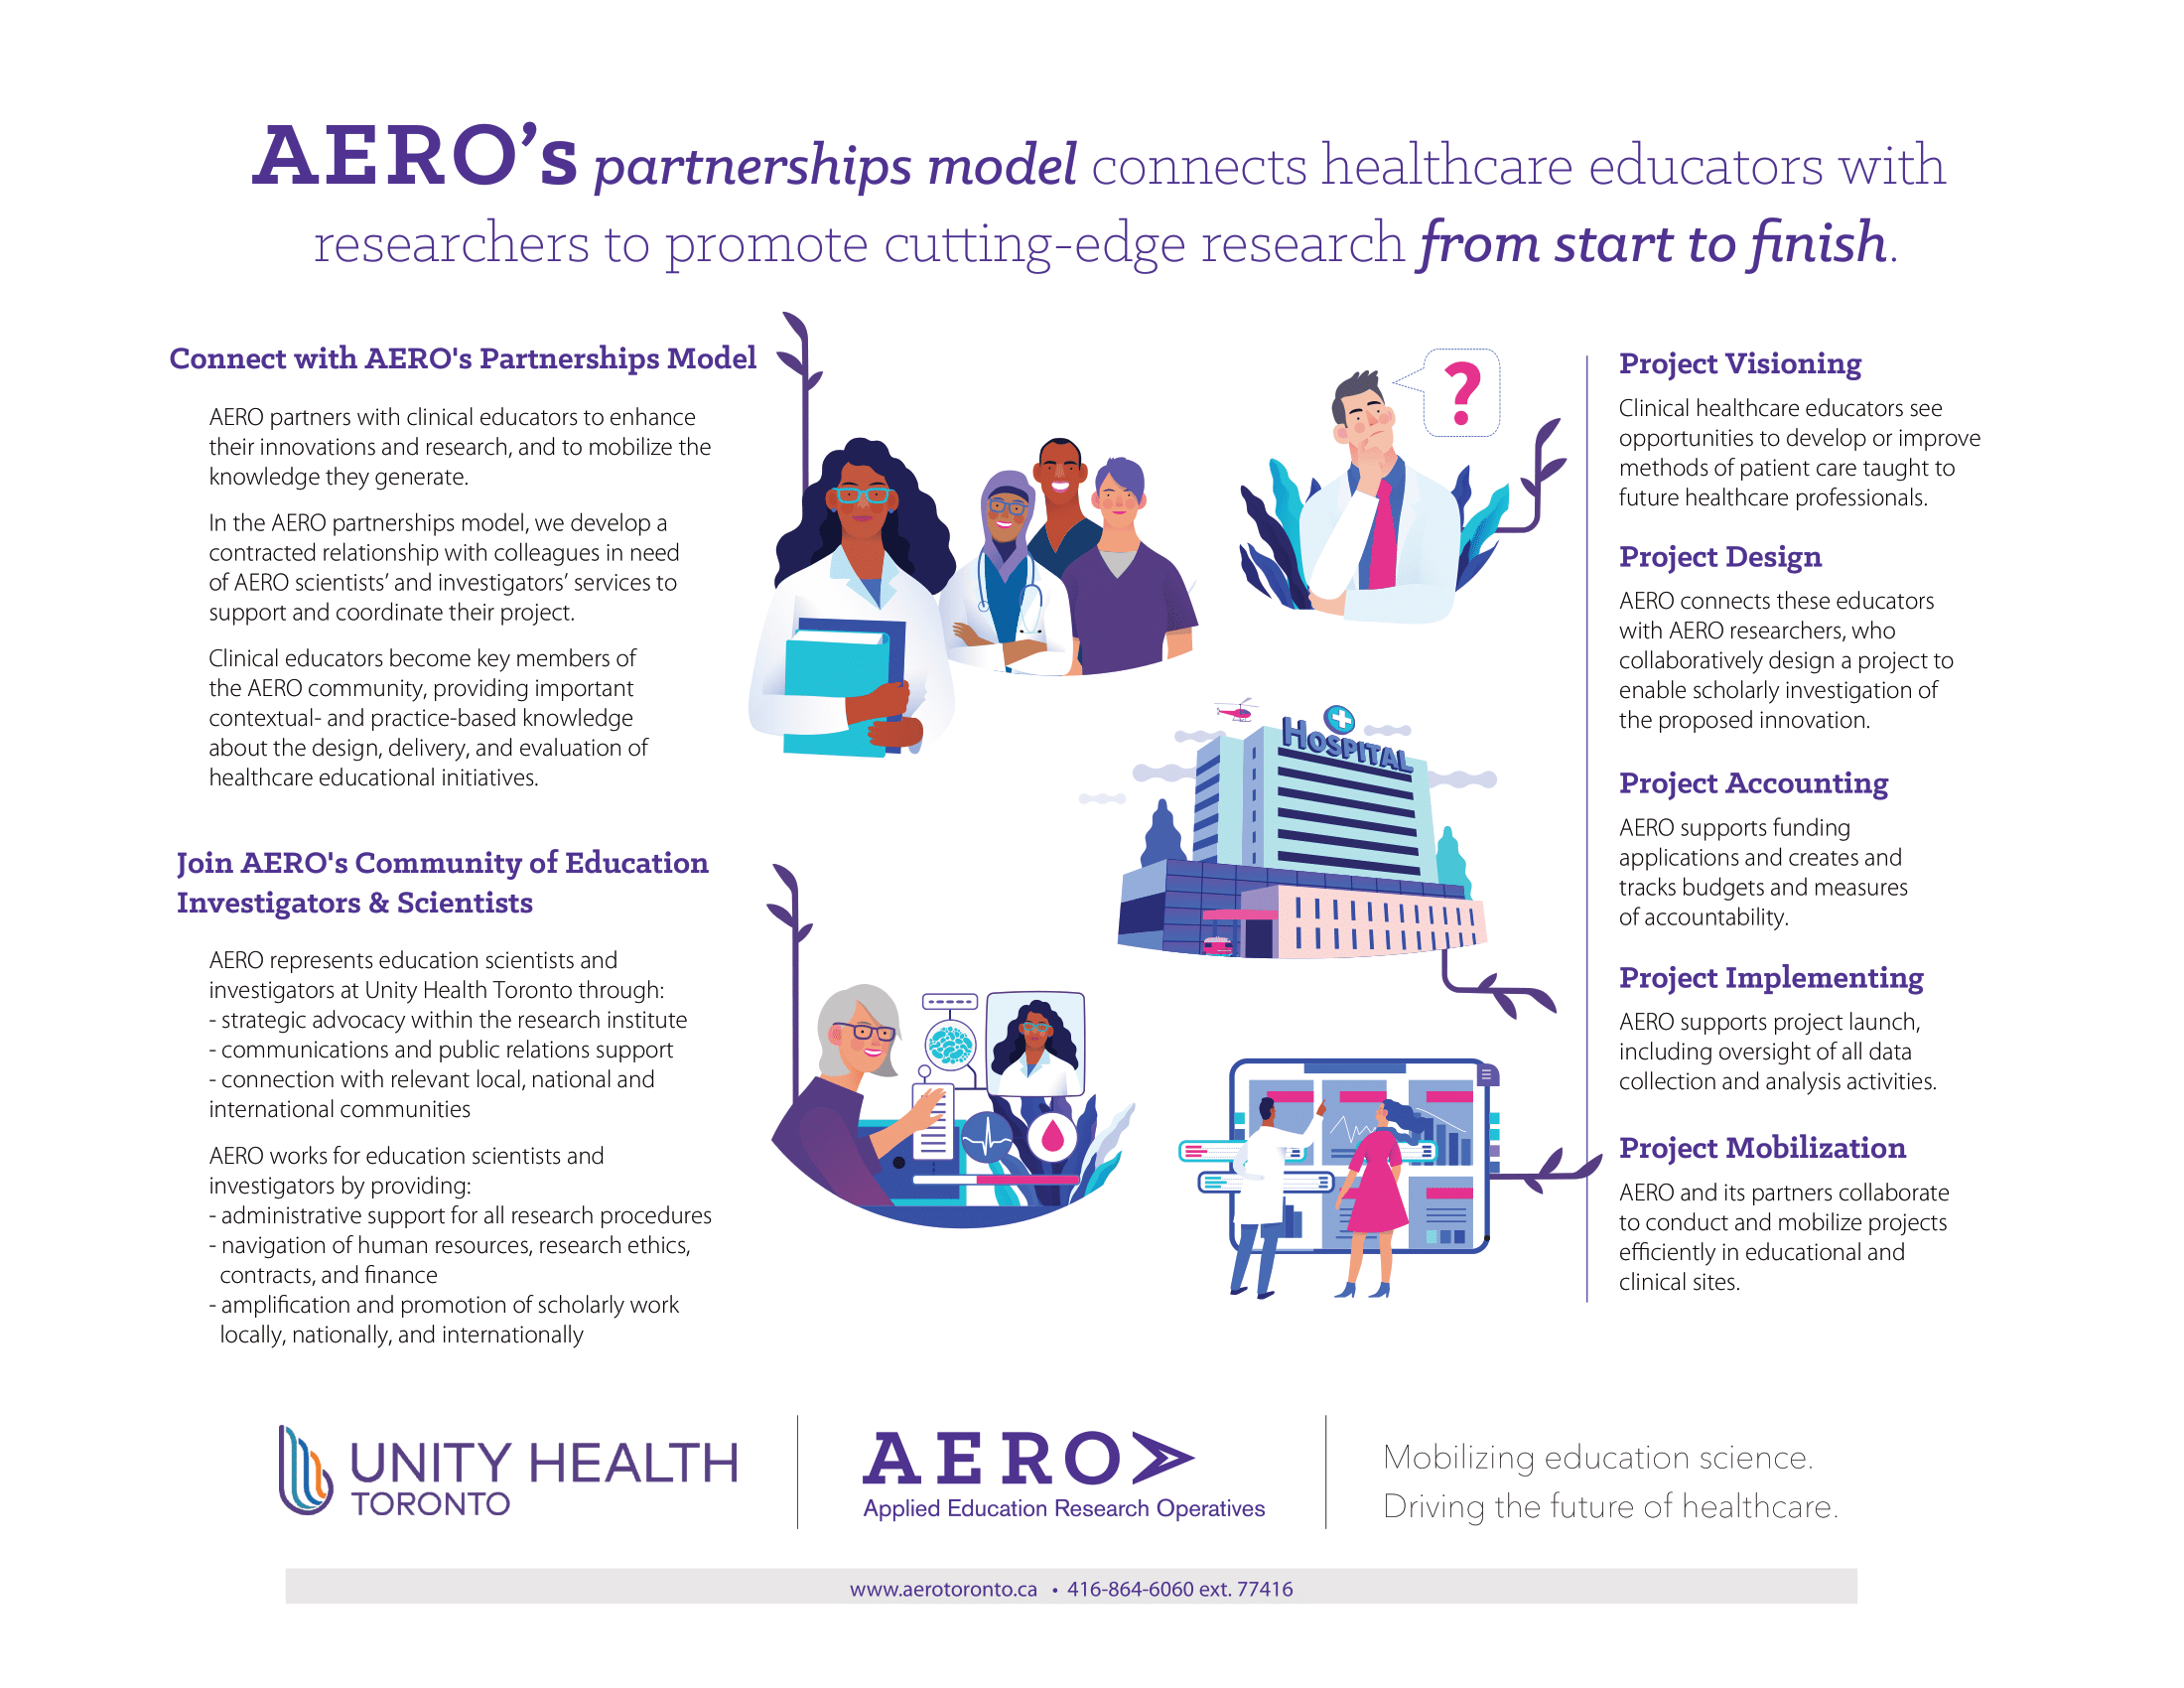 AERO's Partnership Model